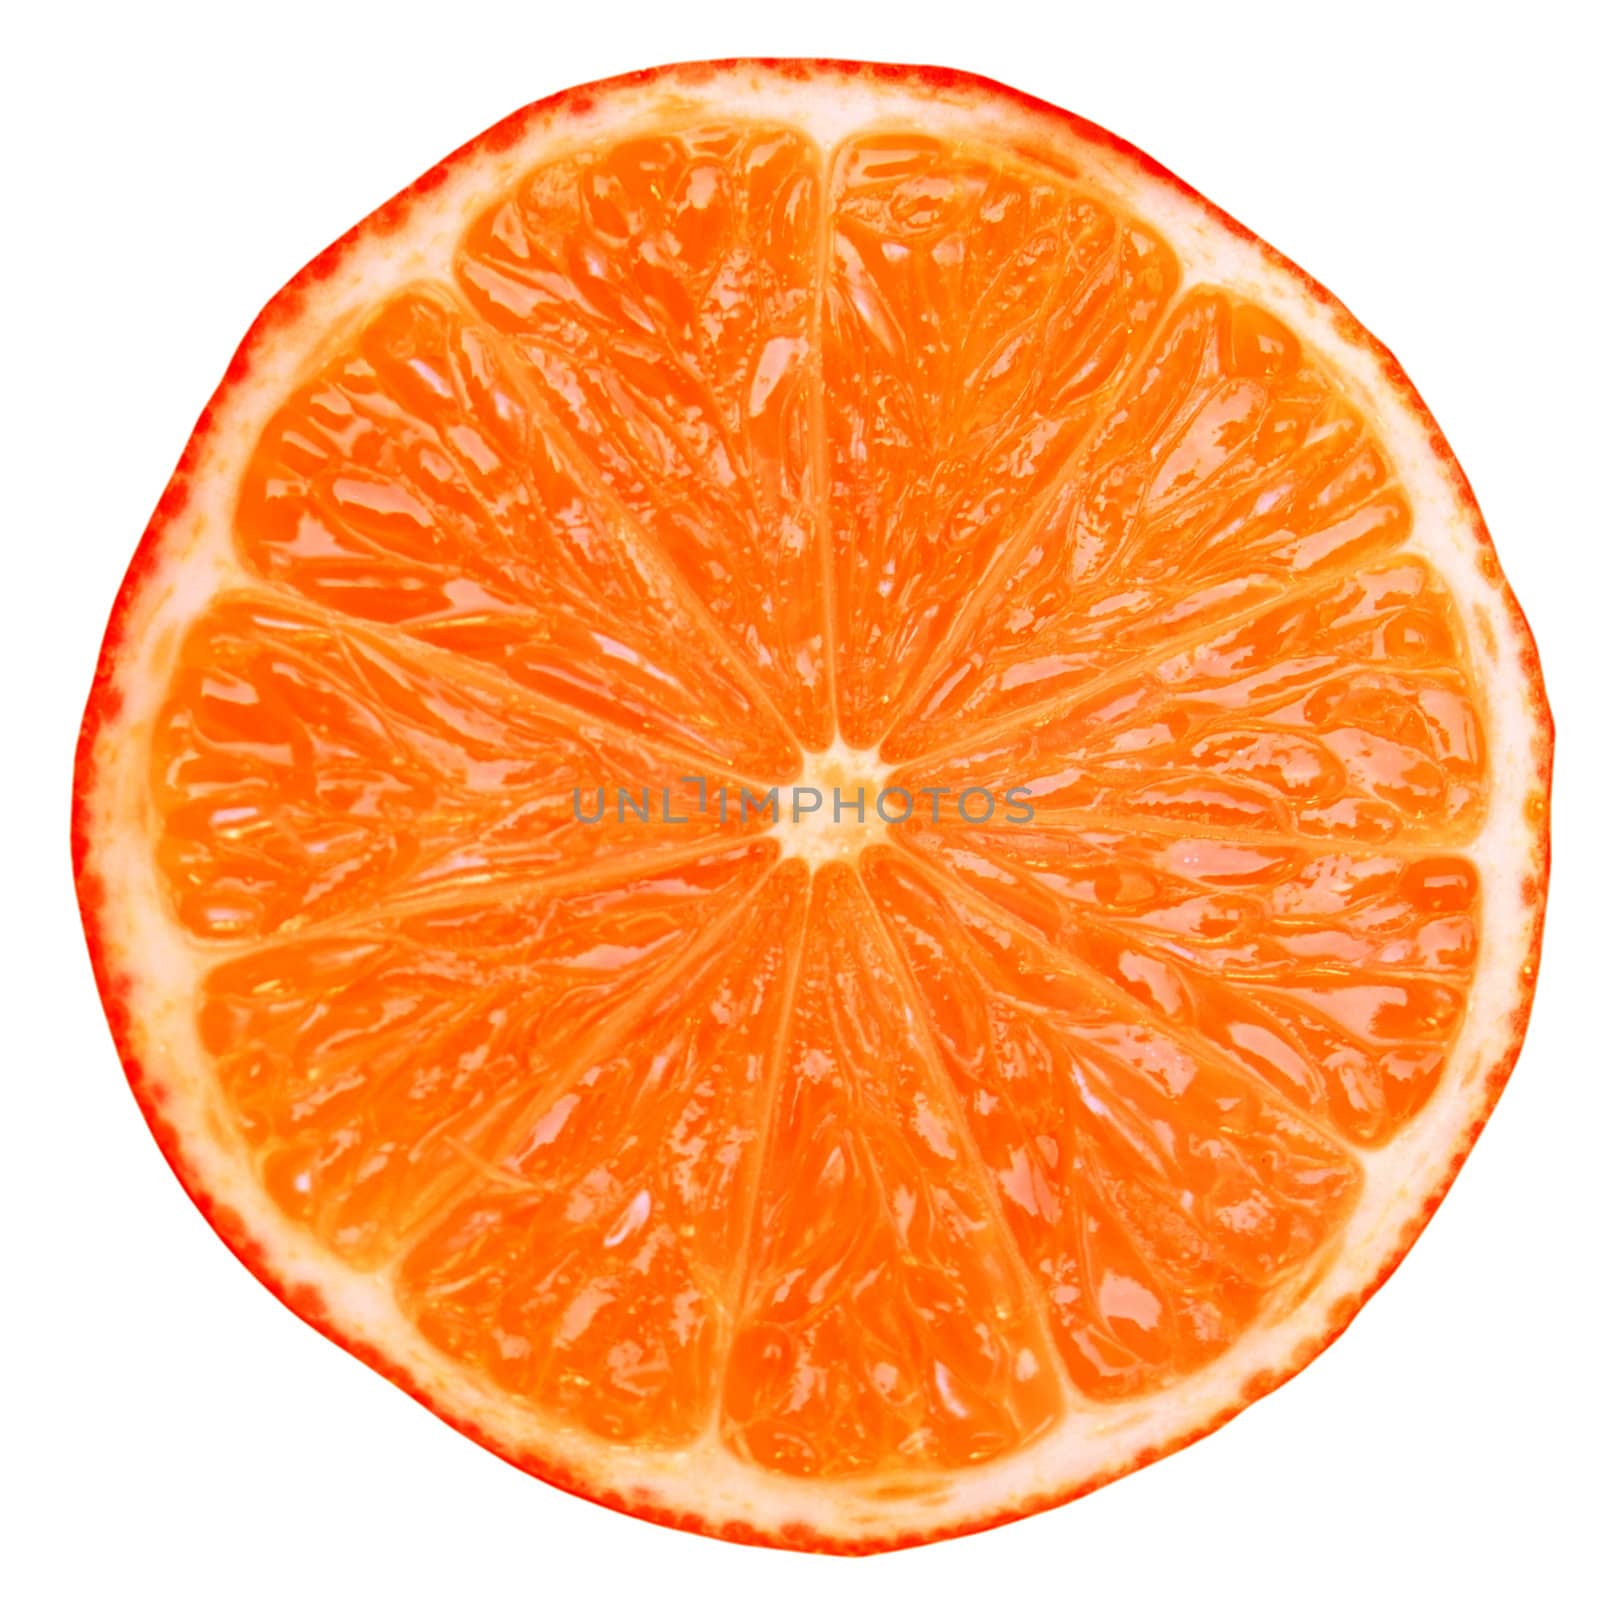 Orange by claudiodivizia